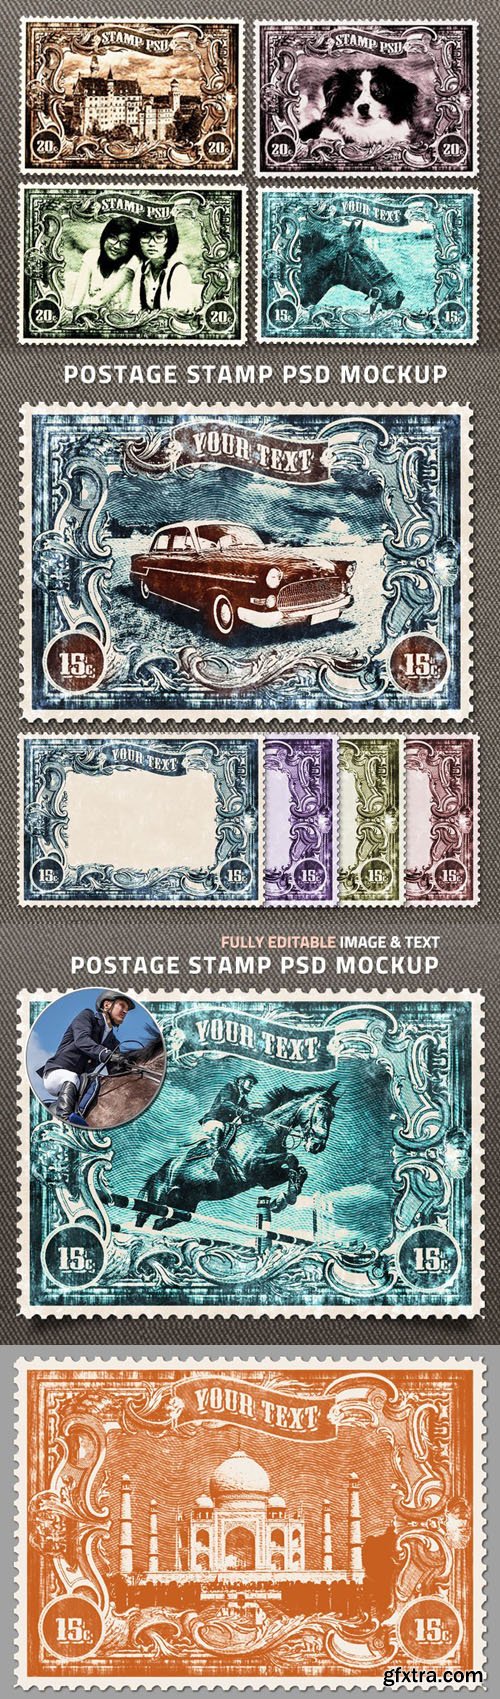 Postage Stamps PSD Mockup